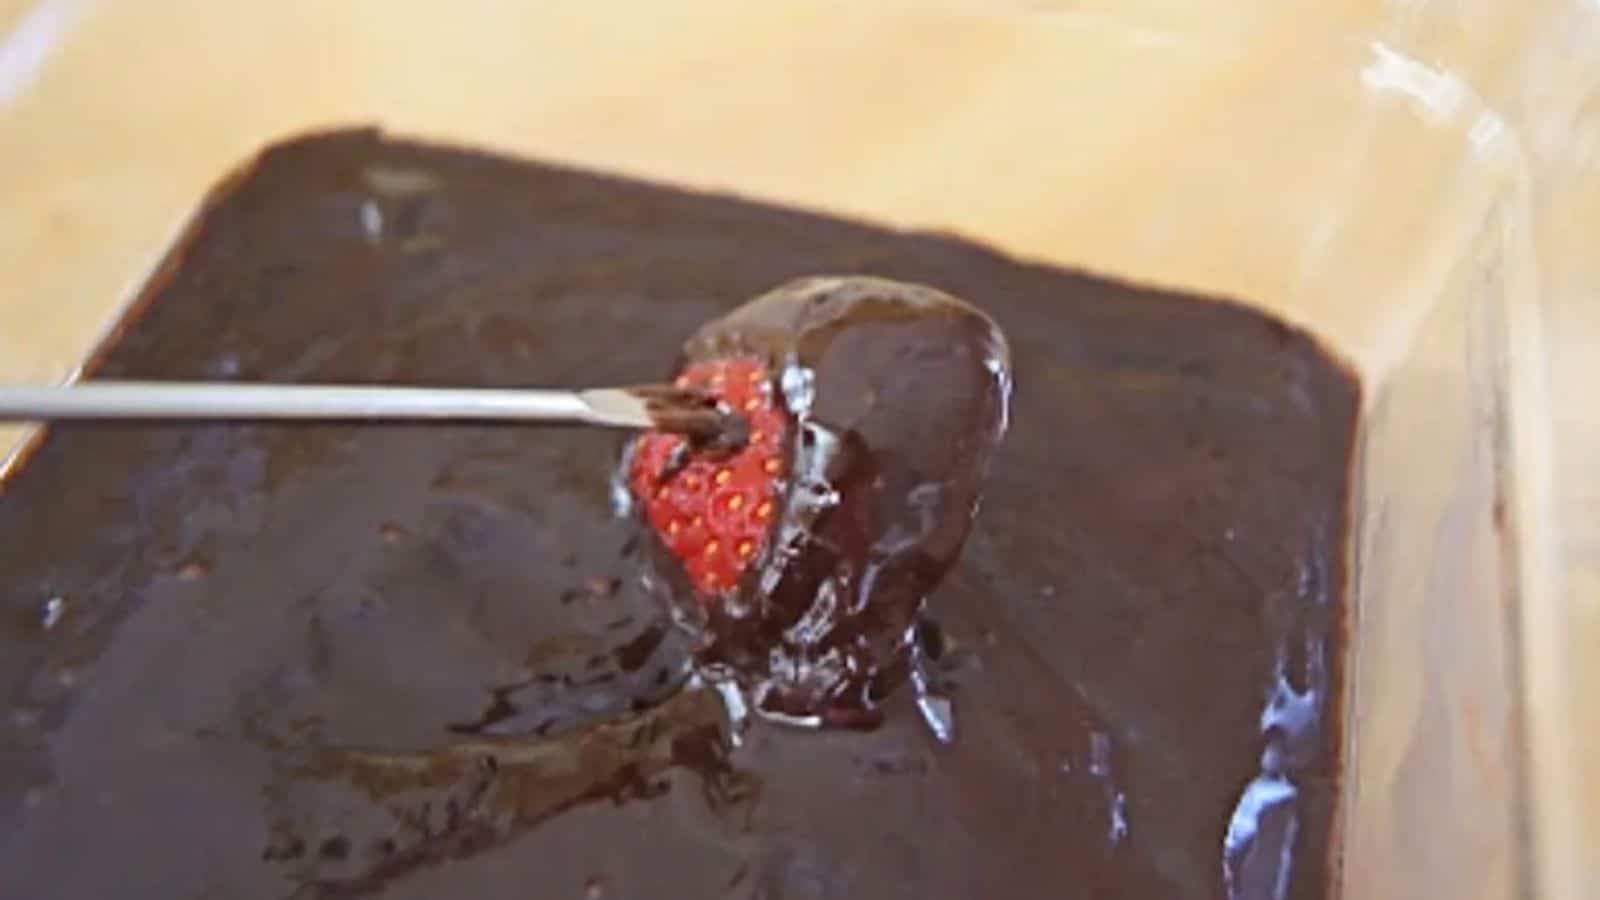 Image shows a fondue fork dipping a strawberry into chocolate fondue.